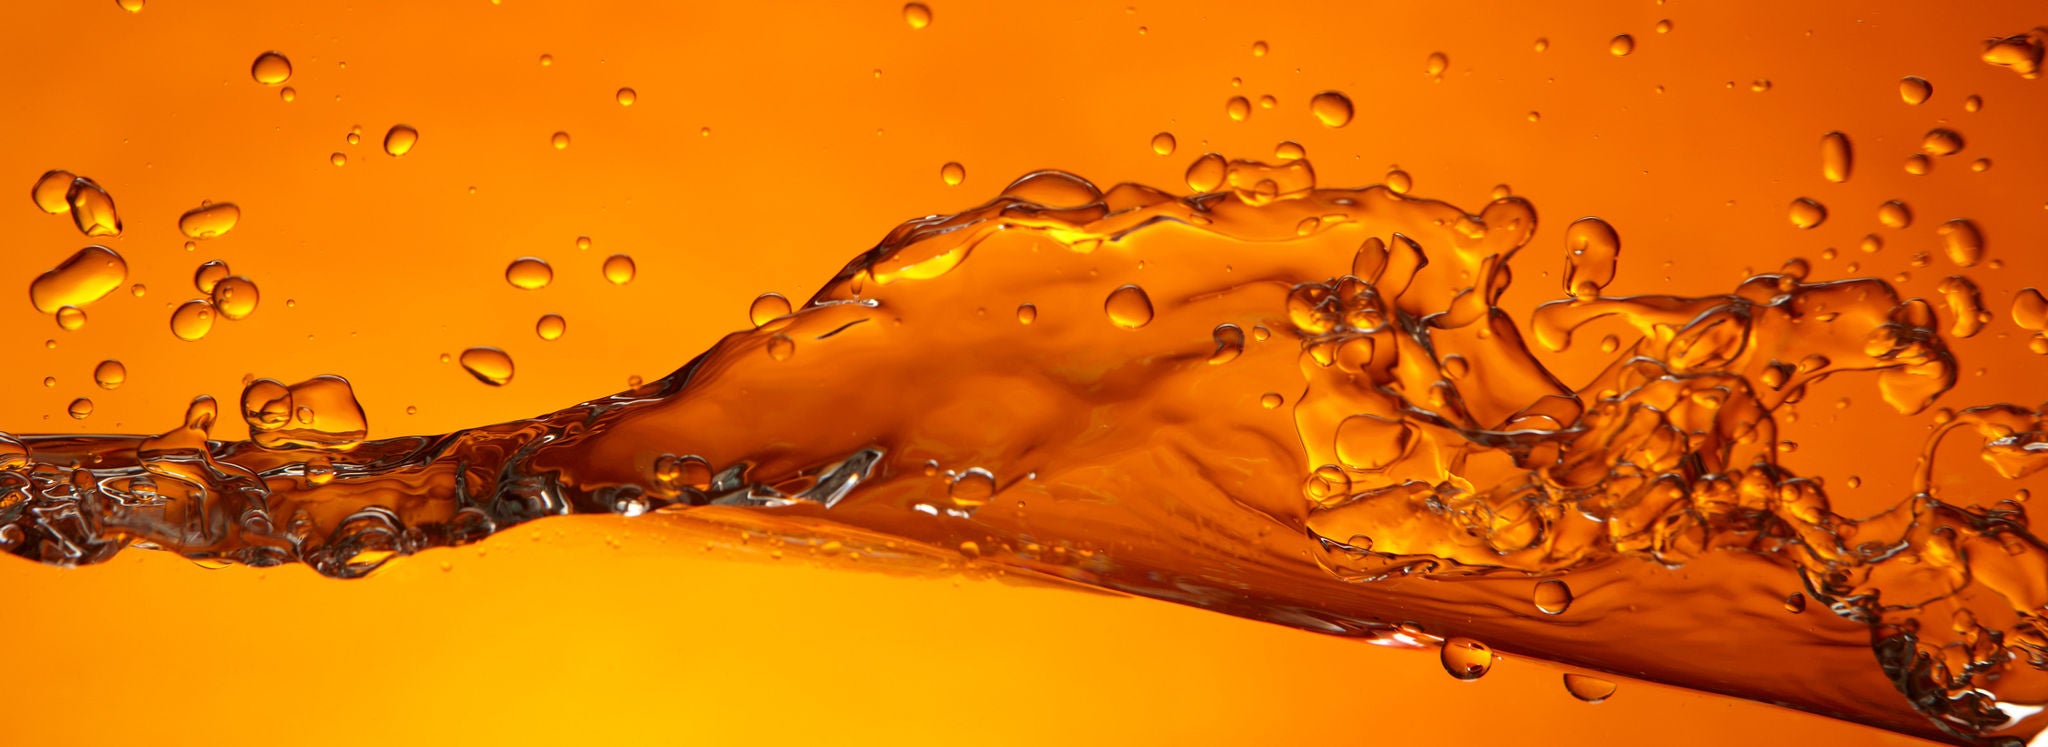 Artistic image with an orange background of liquid used in biodiesel transportation splashing